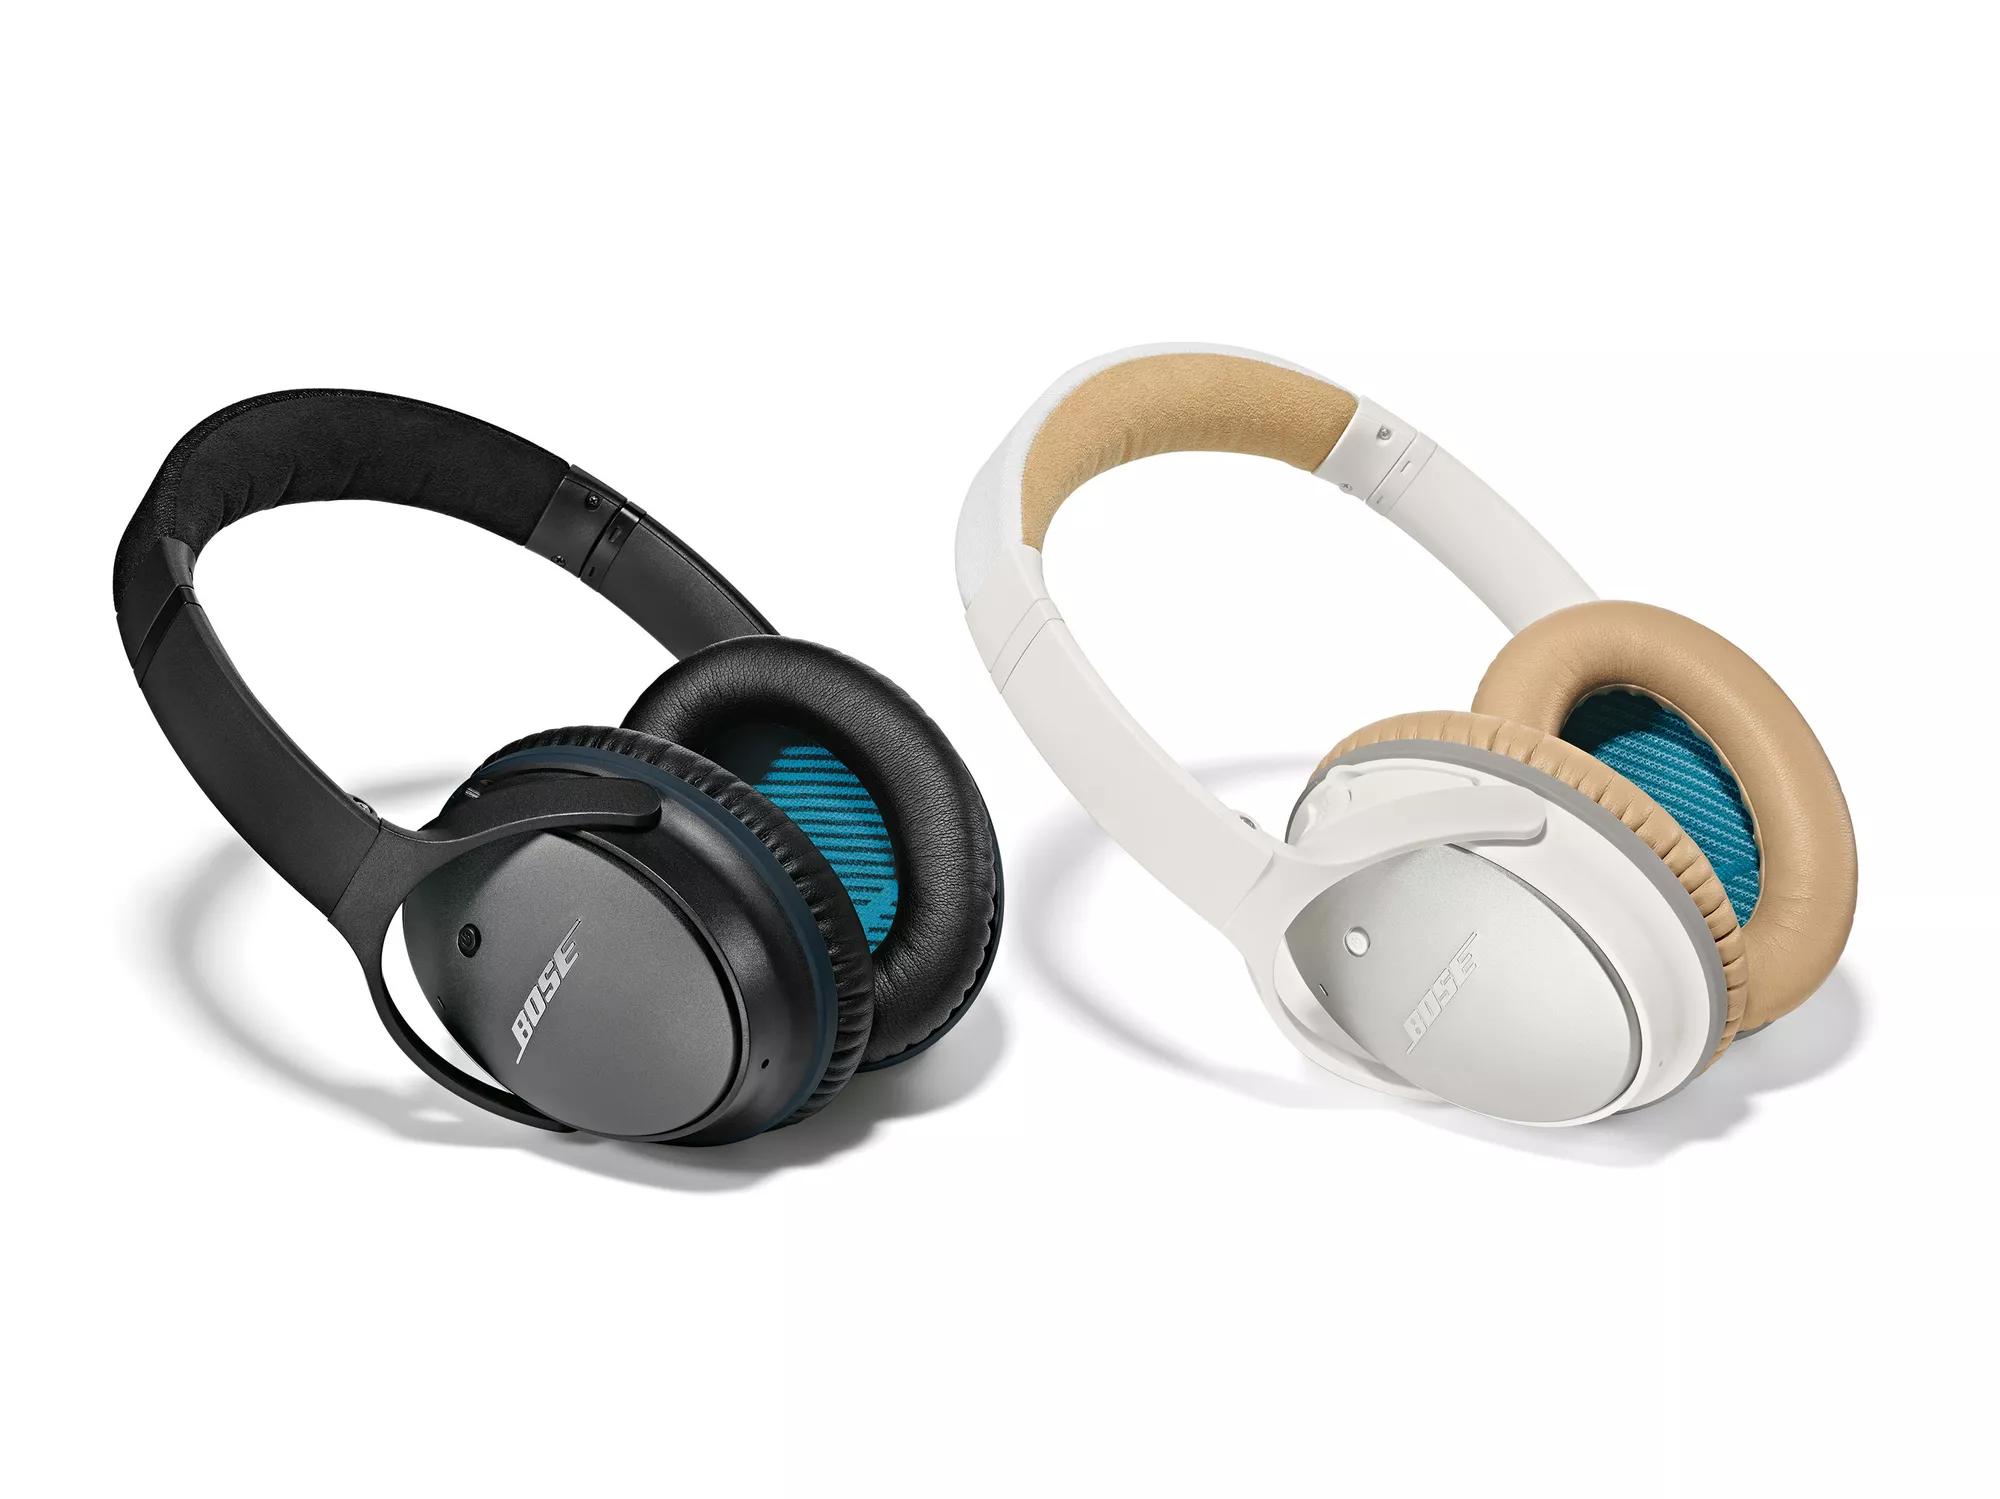 Introducing QuietComfort 25 Acoustic Headphones | Bose